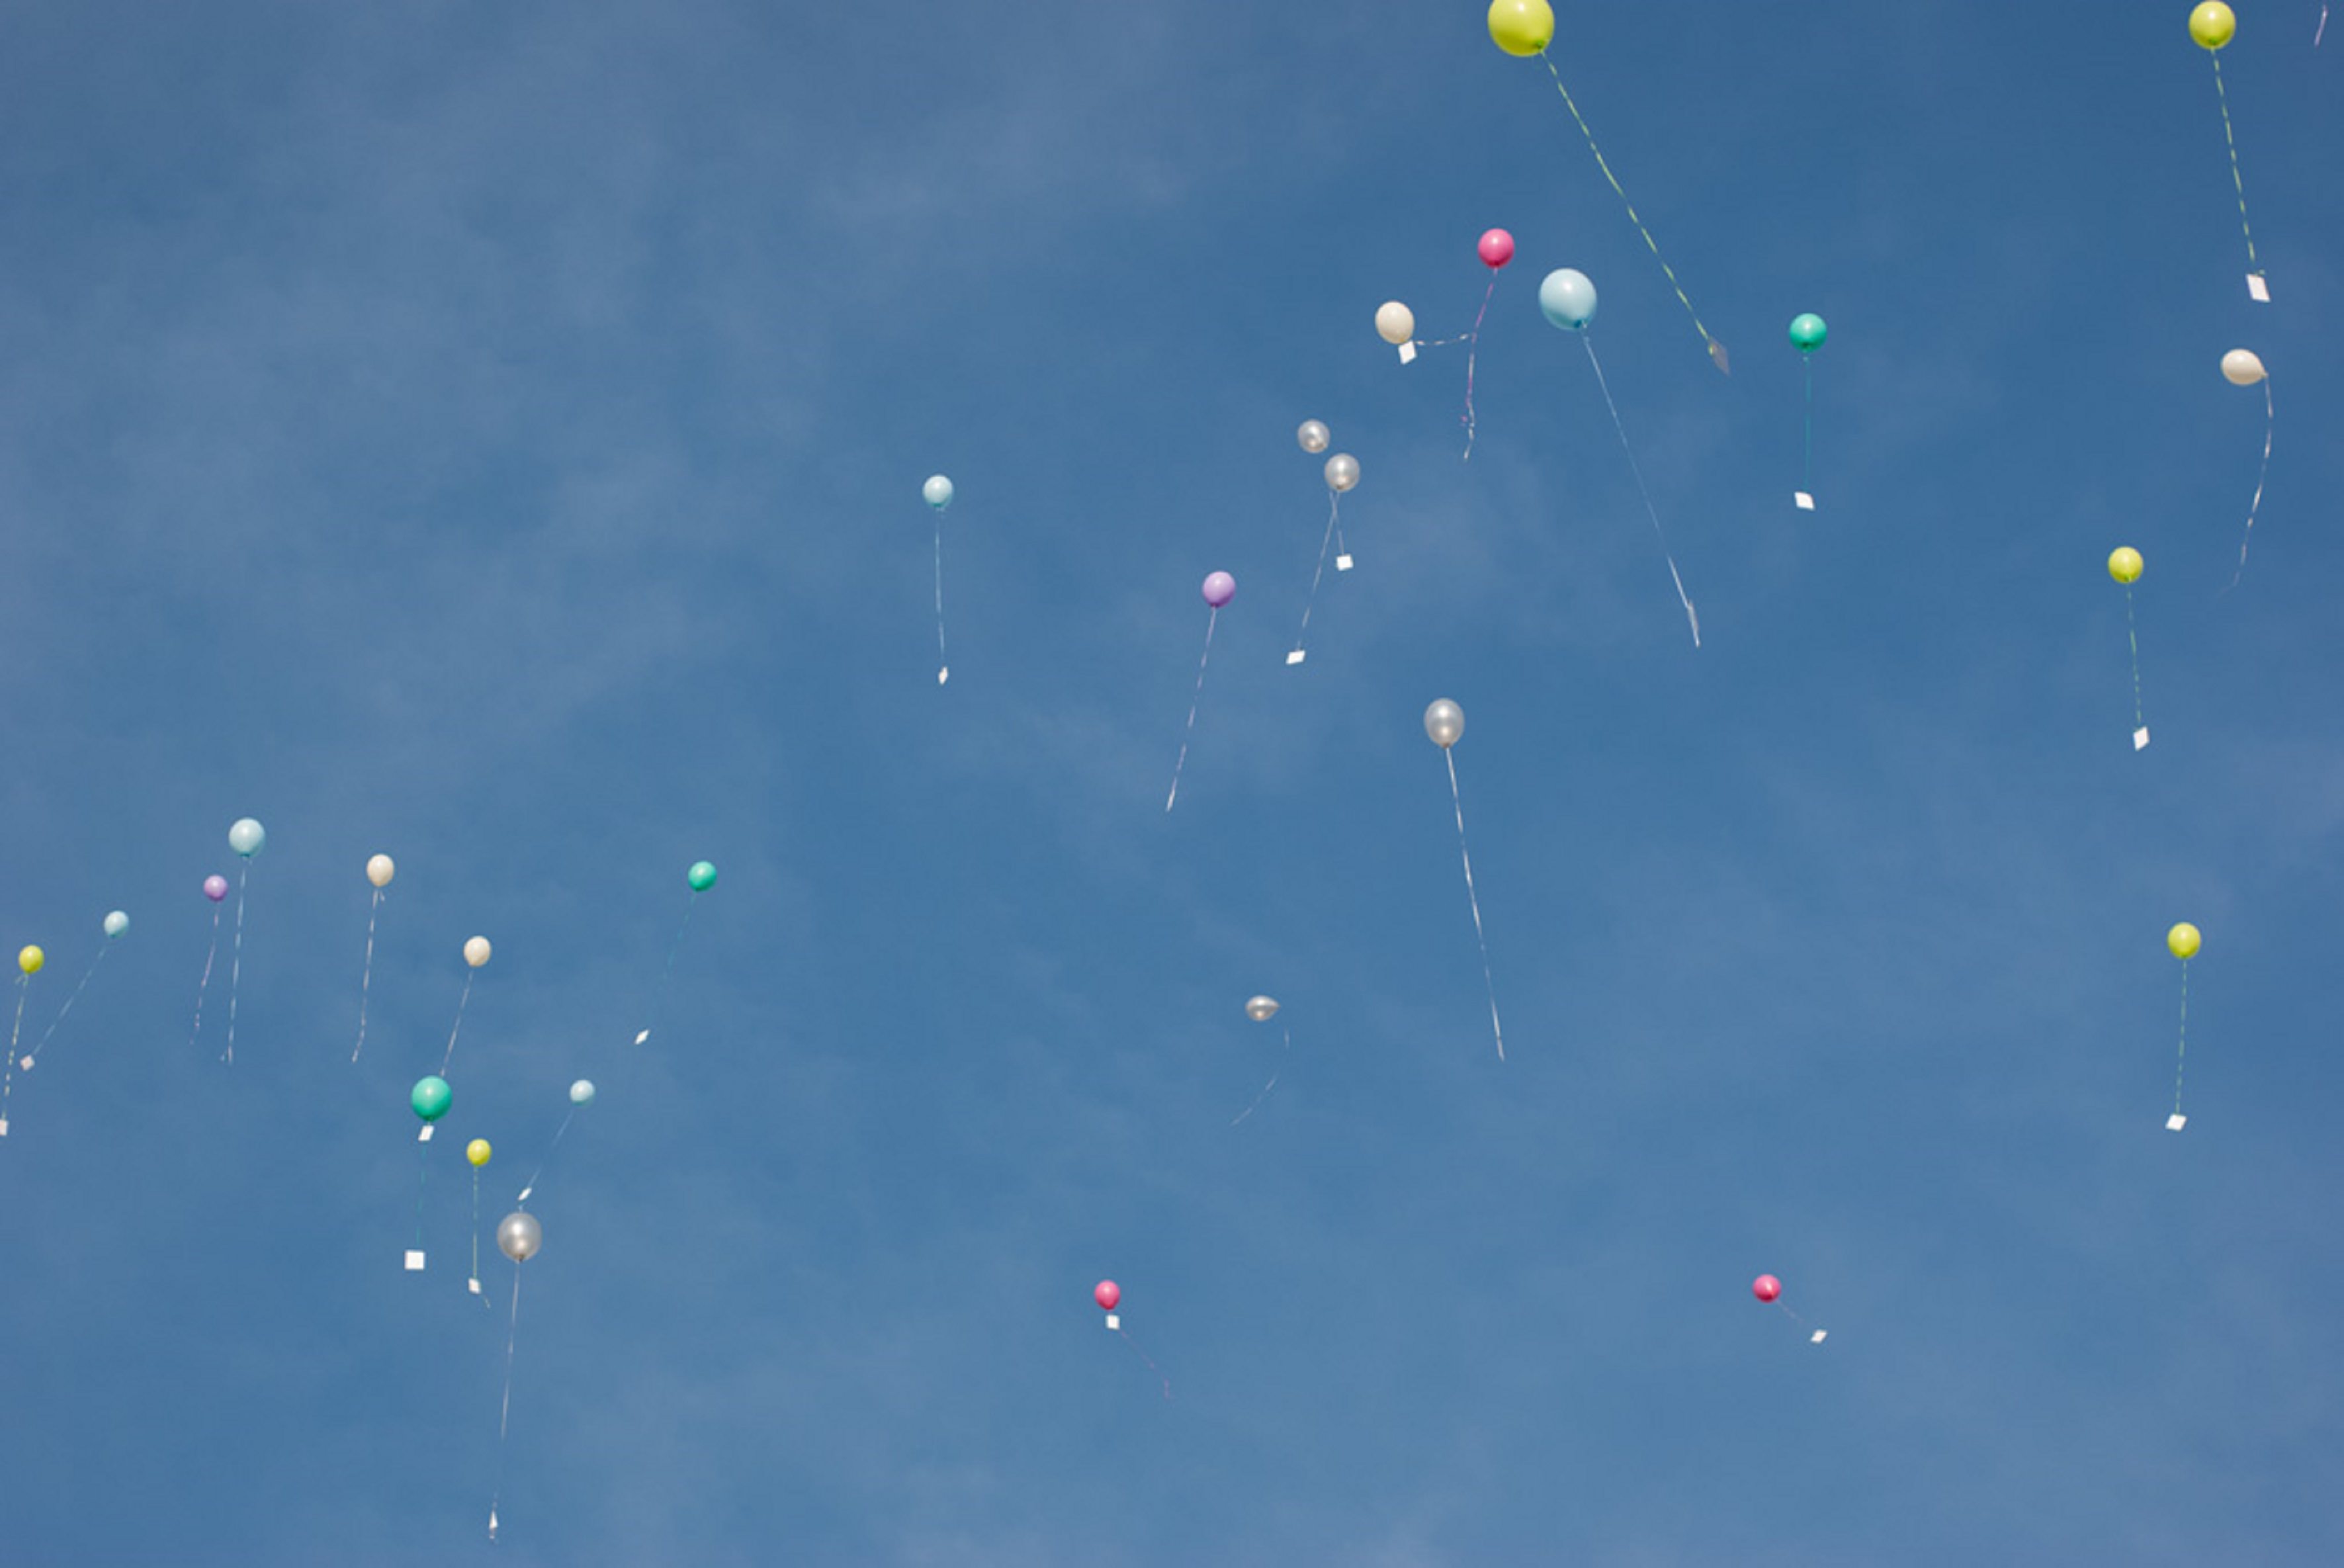 Kontakt. Blauer Himmel mit bunten Luftballons and denen Postkarten davonfliegen.